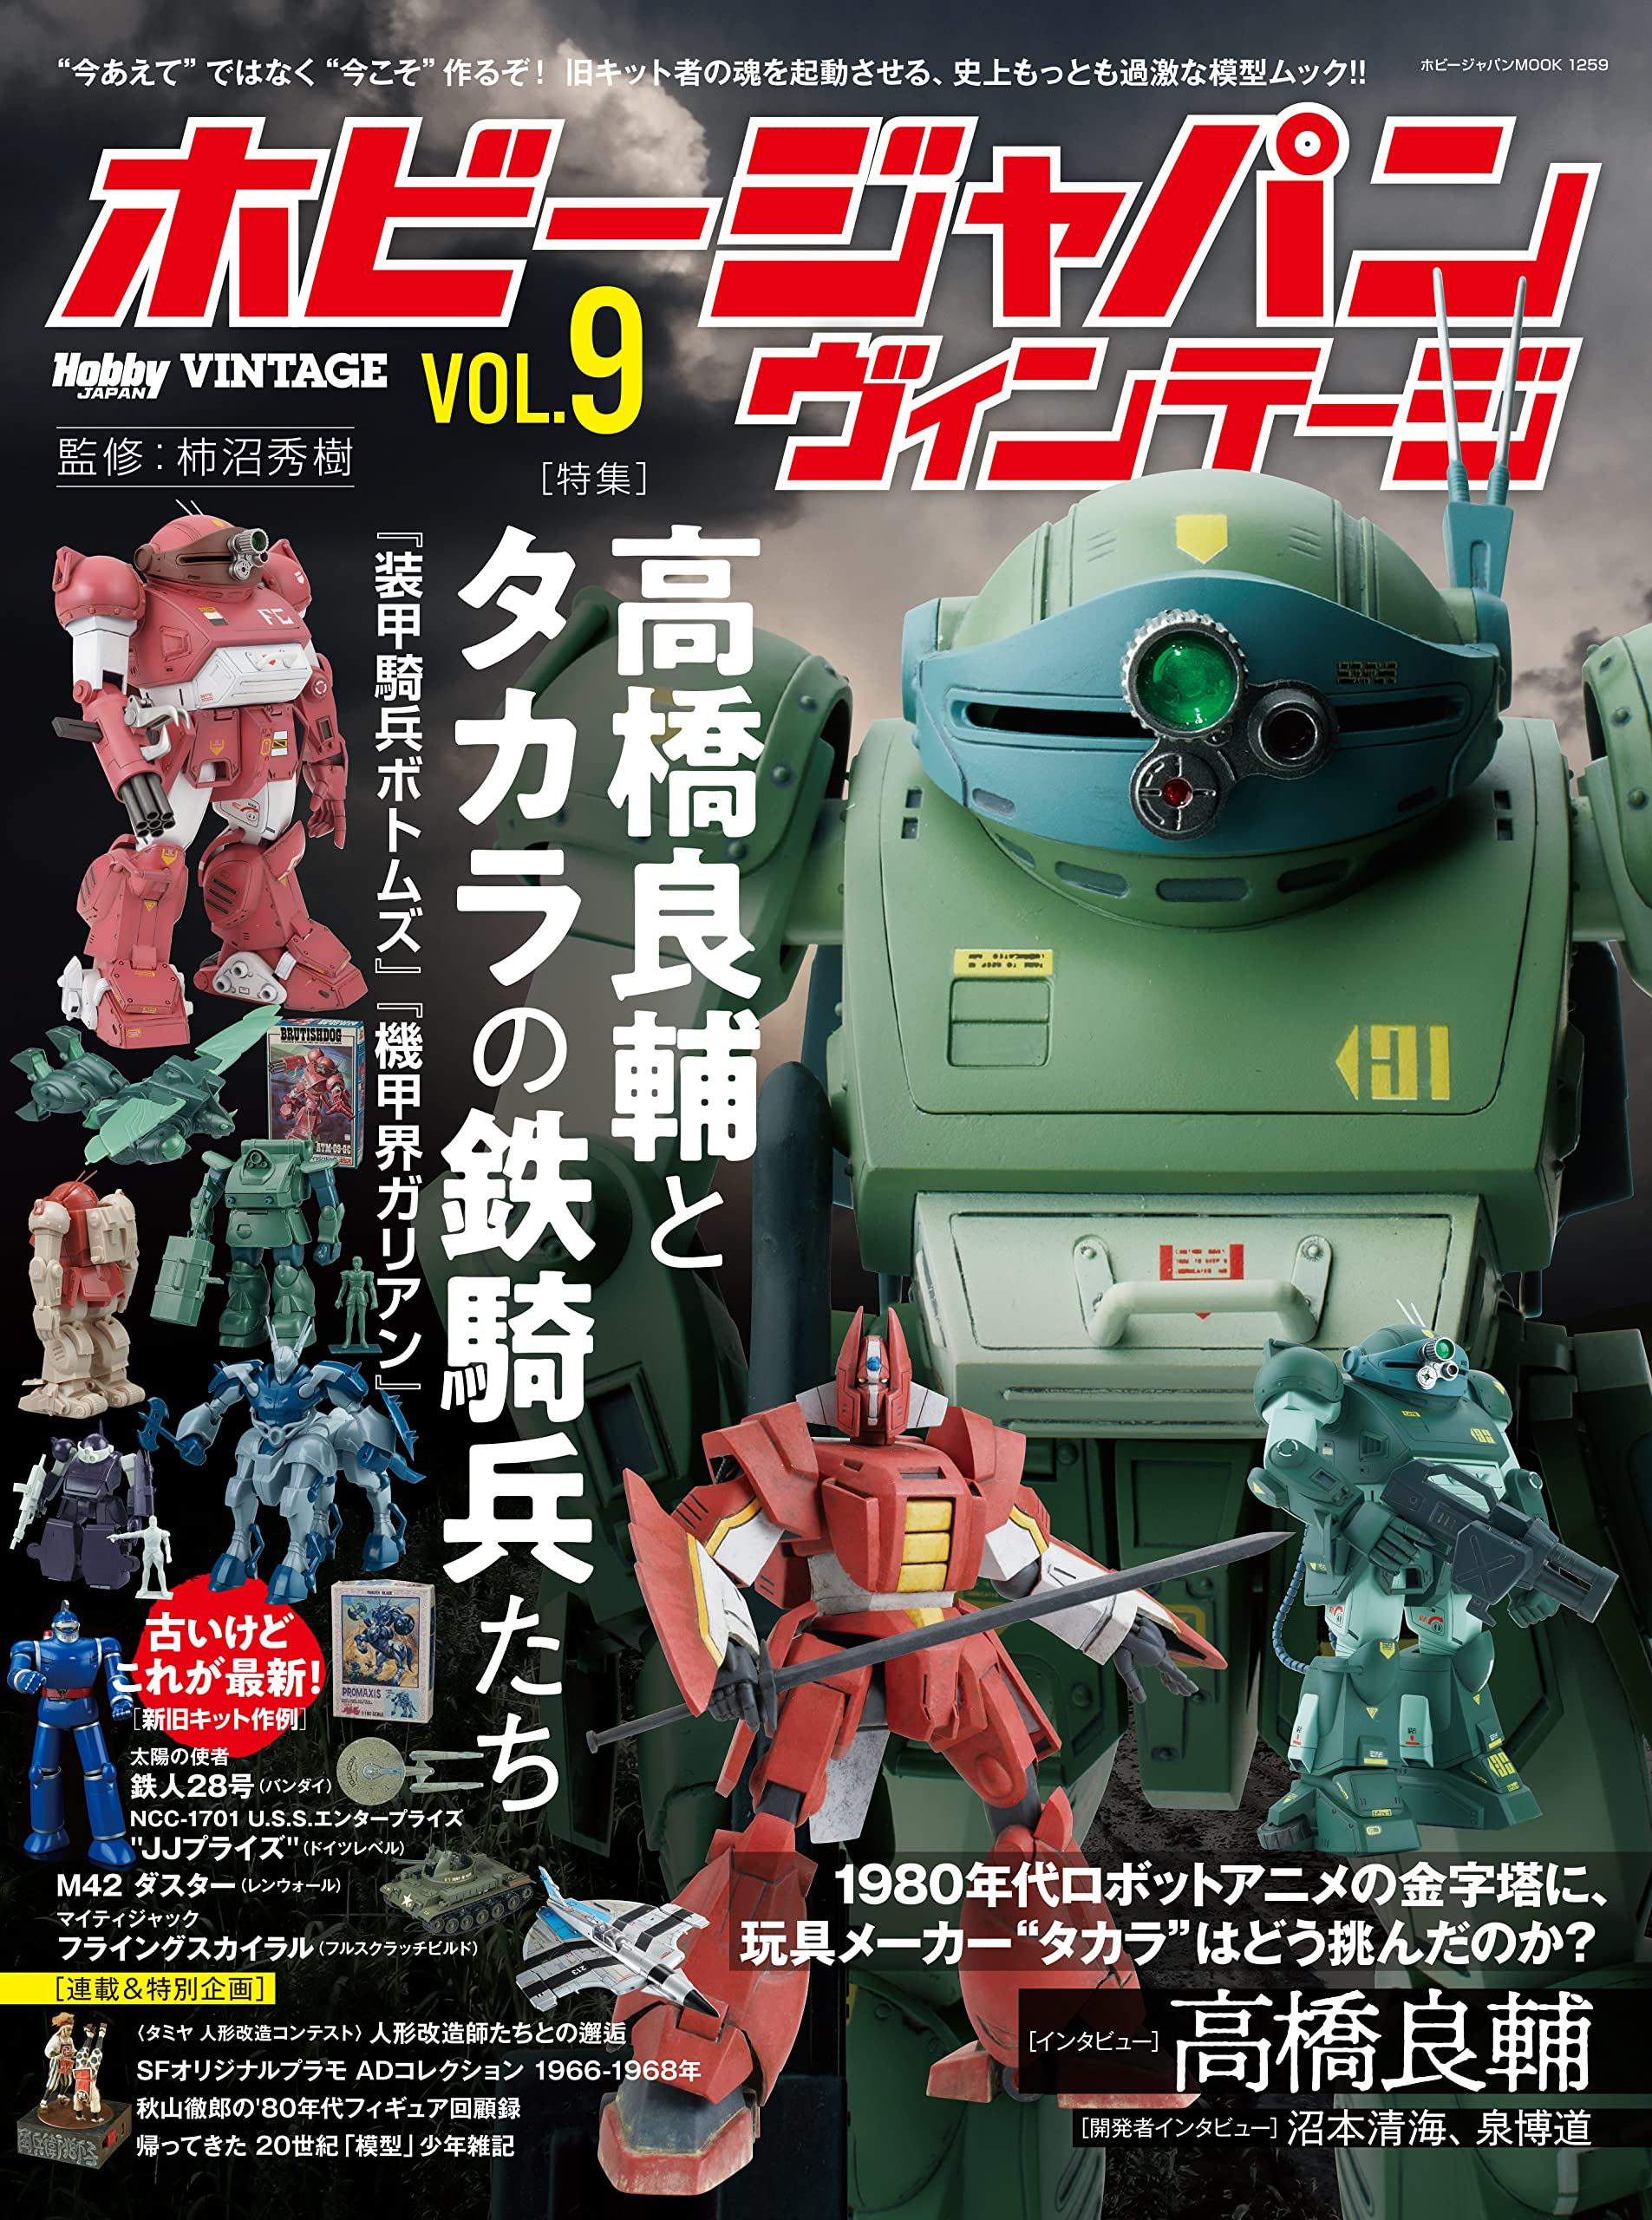 Toy Fair - MegaHouse, SEGA, Hobby Japan Anime and Game Statues - The Toyark  - News